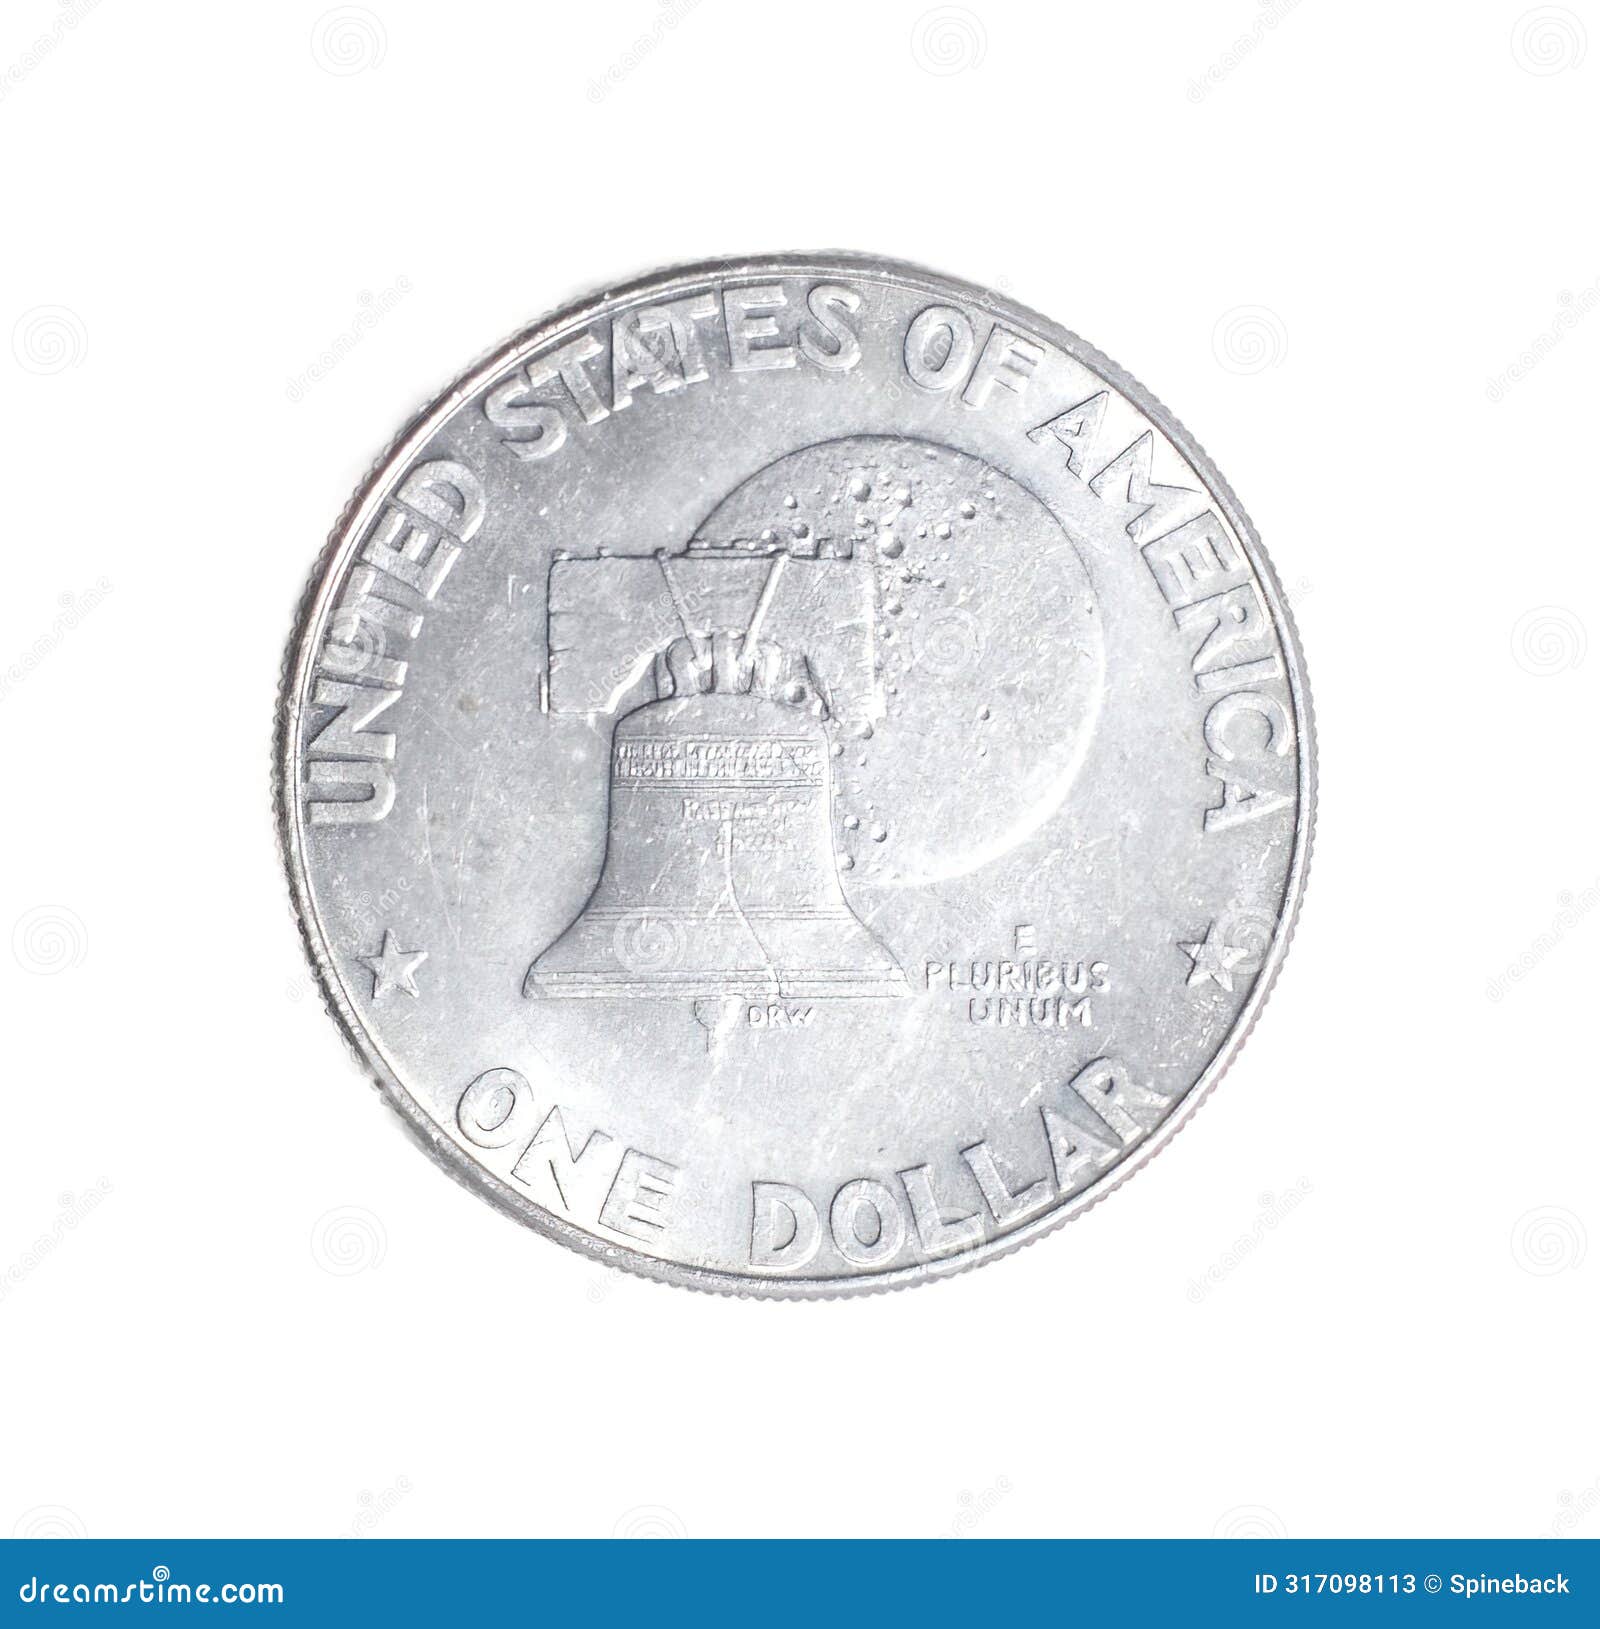 1776 - 1976 d denver mint dwight d eisenhower ike liberty bell with moon silver on reverse side one dollar us bicentennial silver